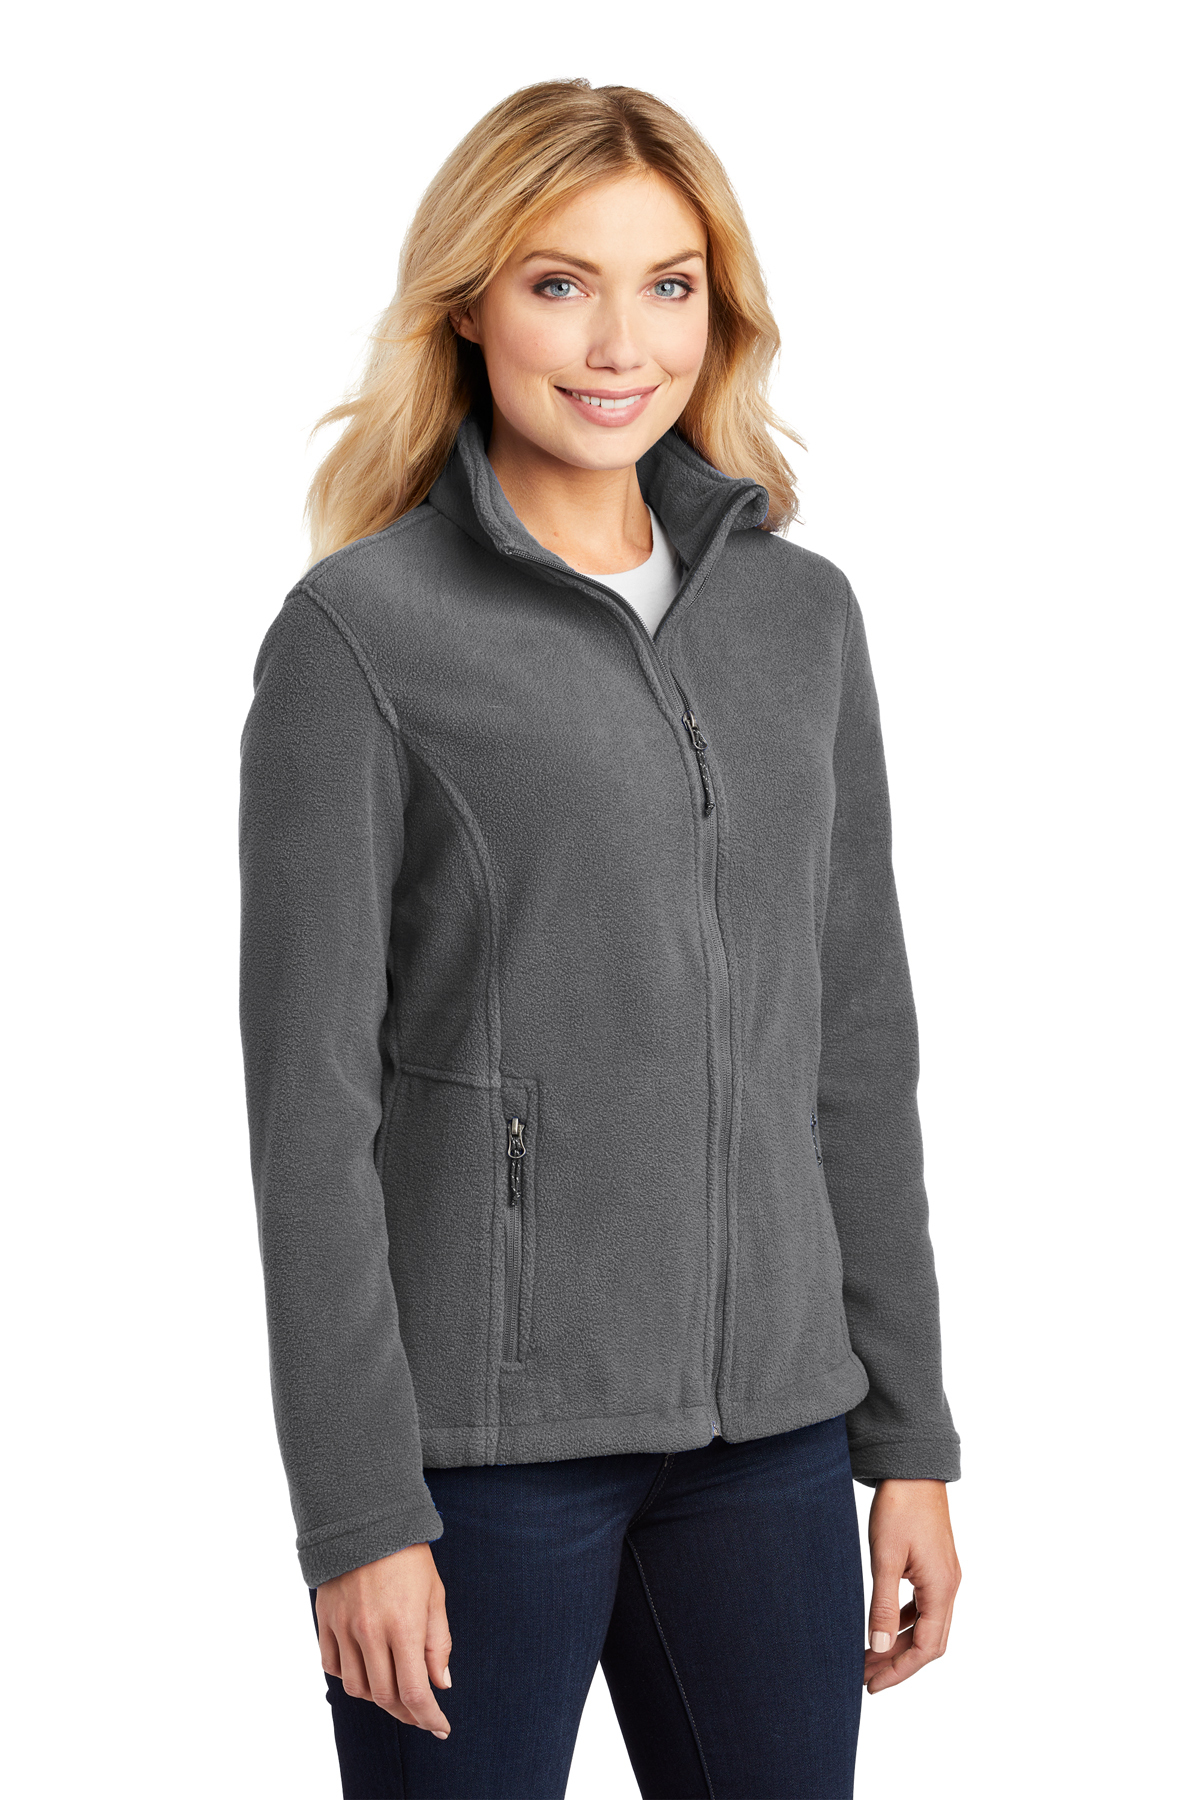 Port Authority Ladies Value Fleece Jacket | Product | Company Casuals